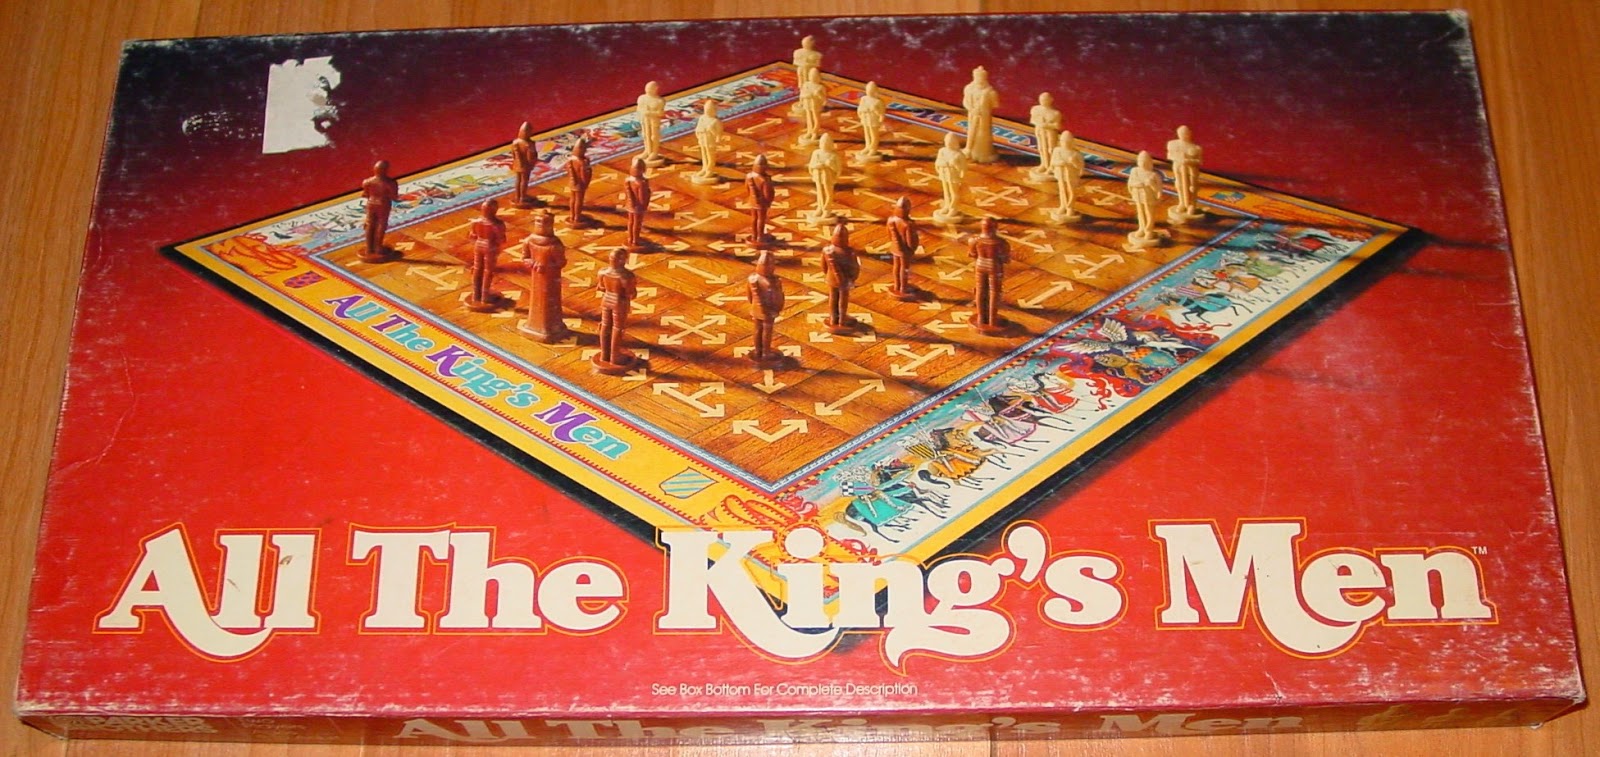 vintage toys - all the kings men board game - Aike's Men Al The King's Men See Box Bottom For Complete. Description